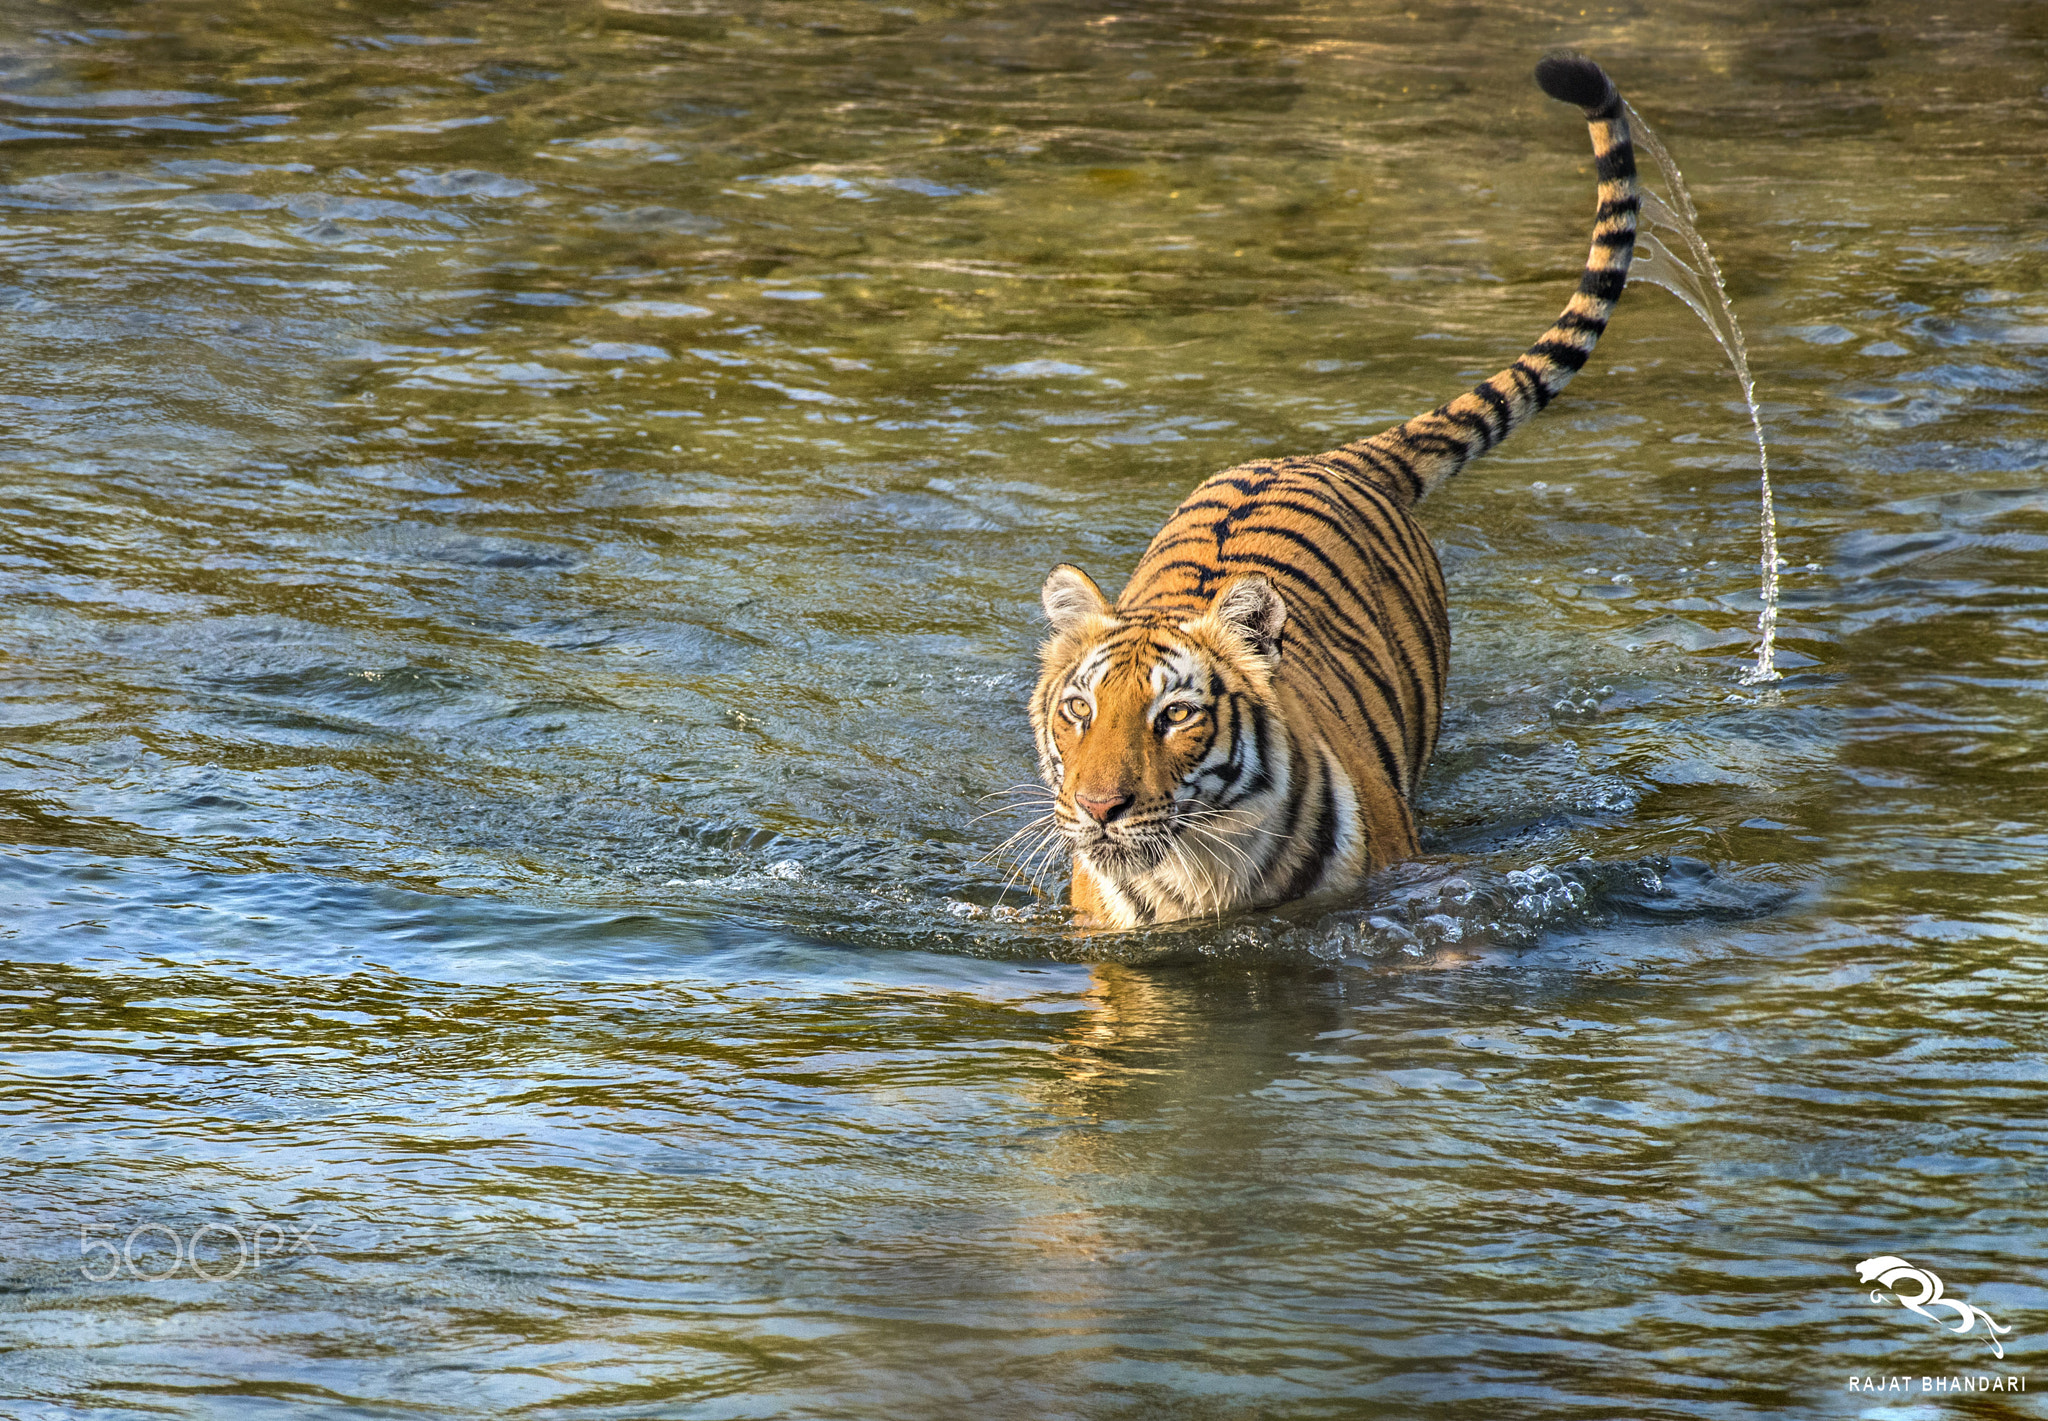 Bigcat sensational in water